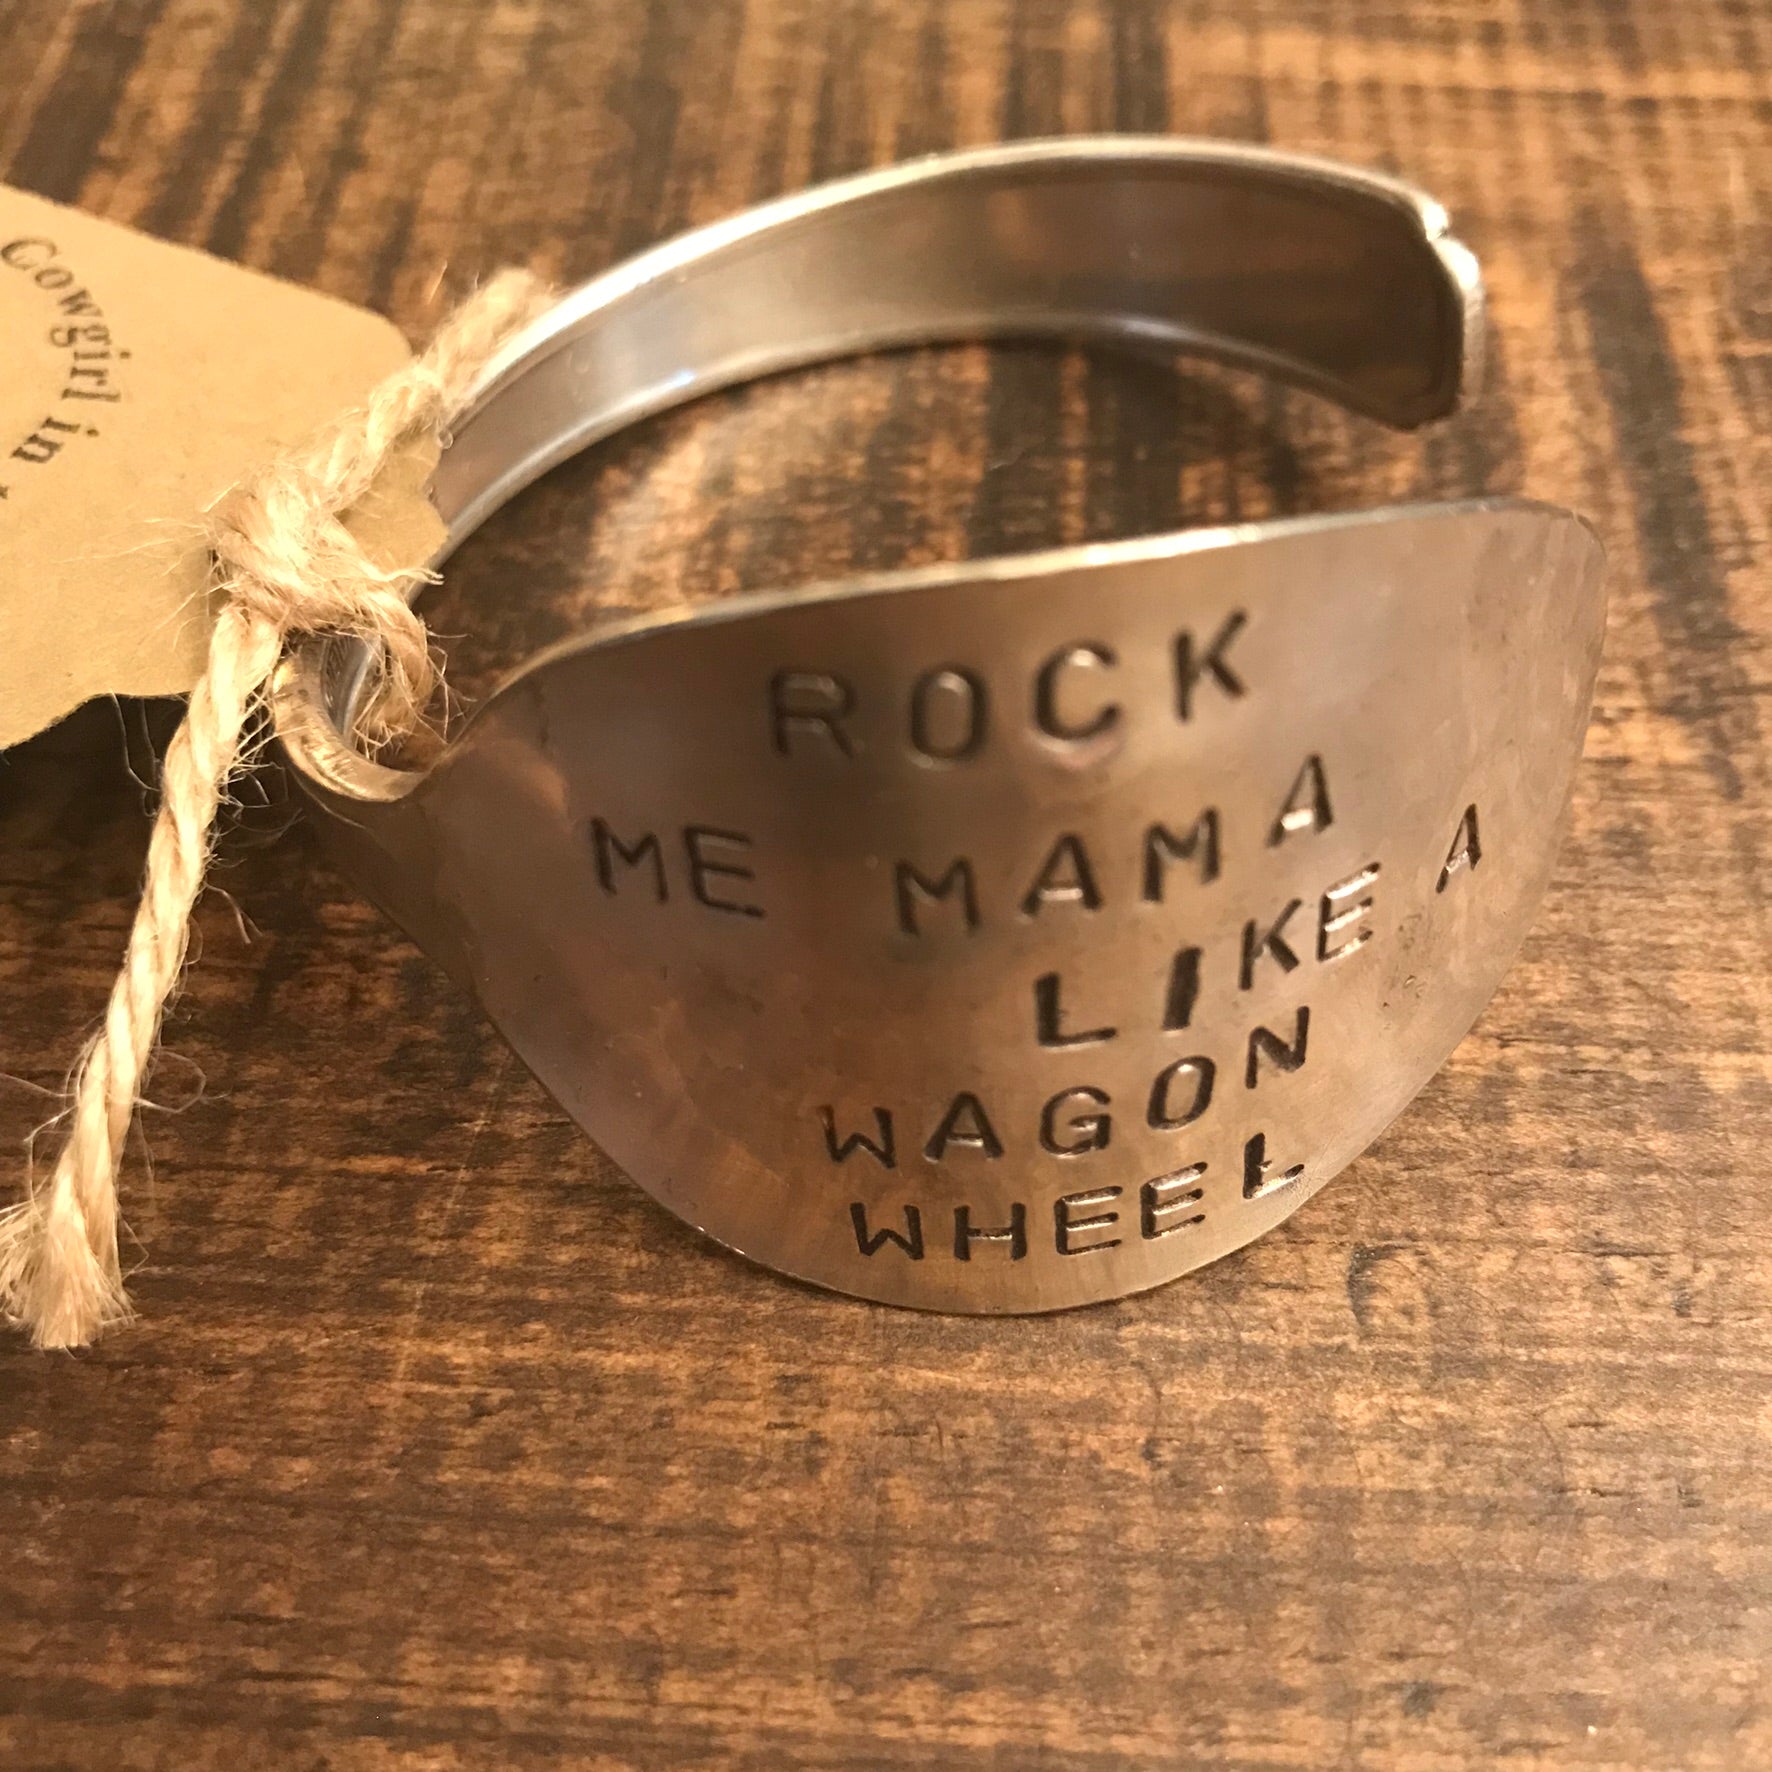 Bracelet - Vintage Spoon Bracelet - Rock Me Mama Like a Wagon Wheel - CLEARANCE